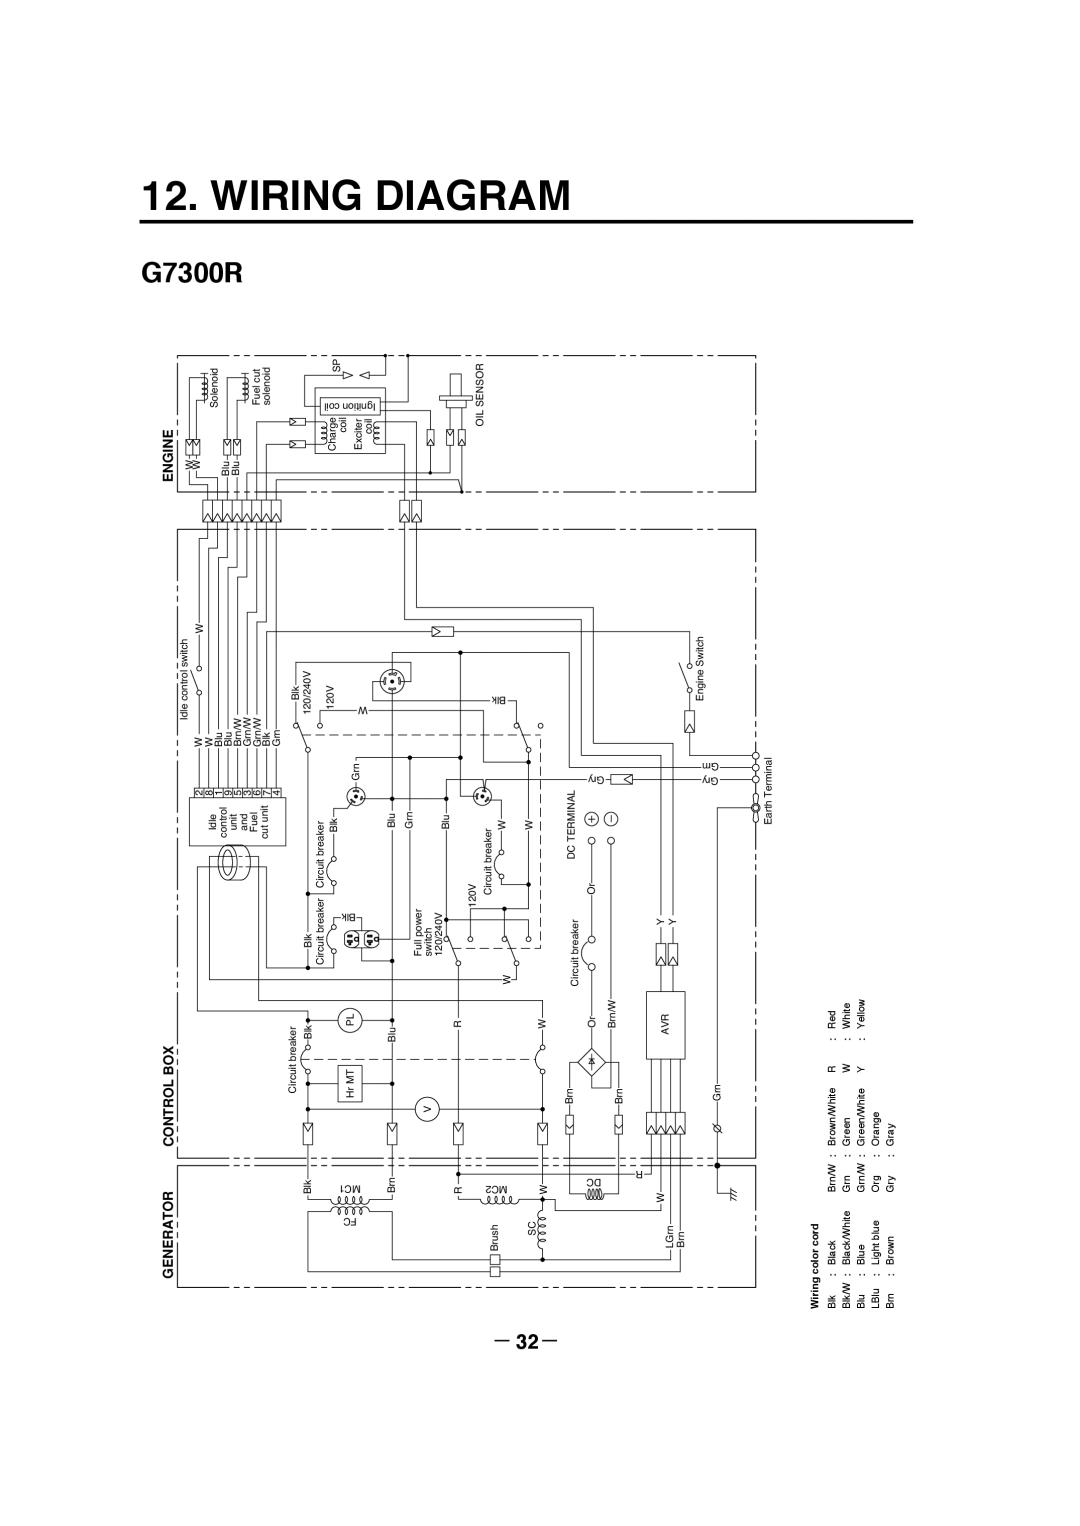 Makita G7301R manuel dutilisation G7300R, Wiring Diagram, － 32－, Generator, Control Box, Engine, Wiring color cord 